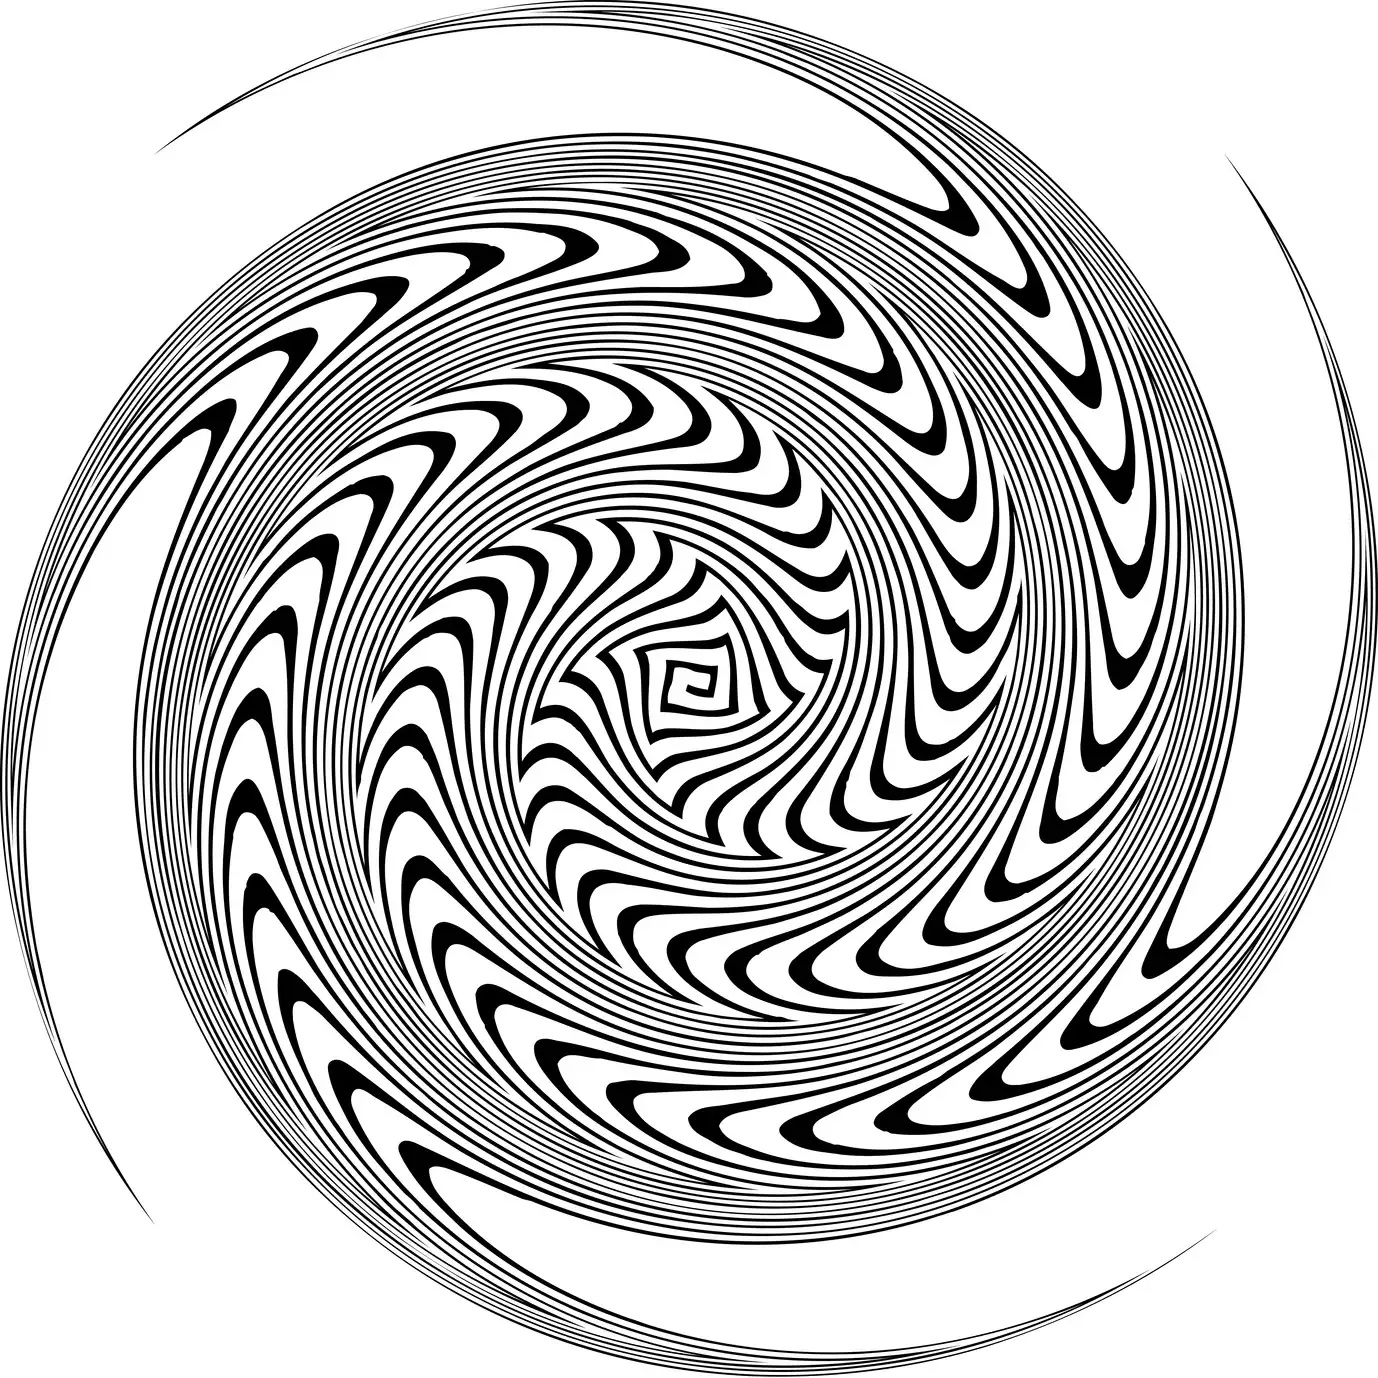 Optical illusion ... Very hypnotic